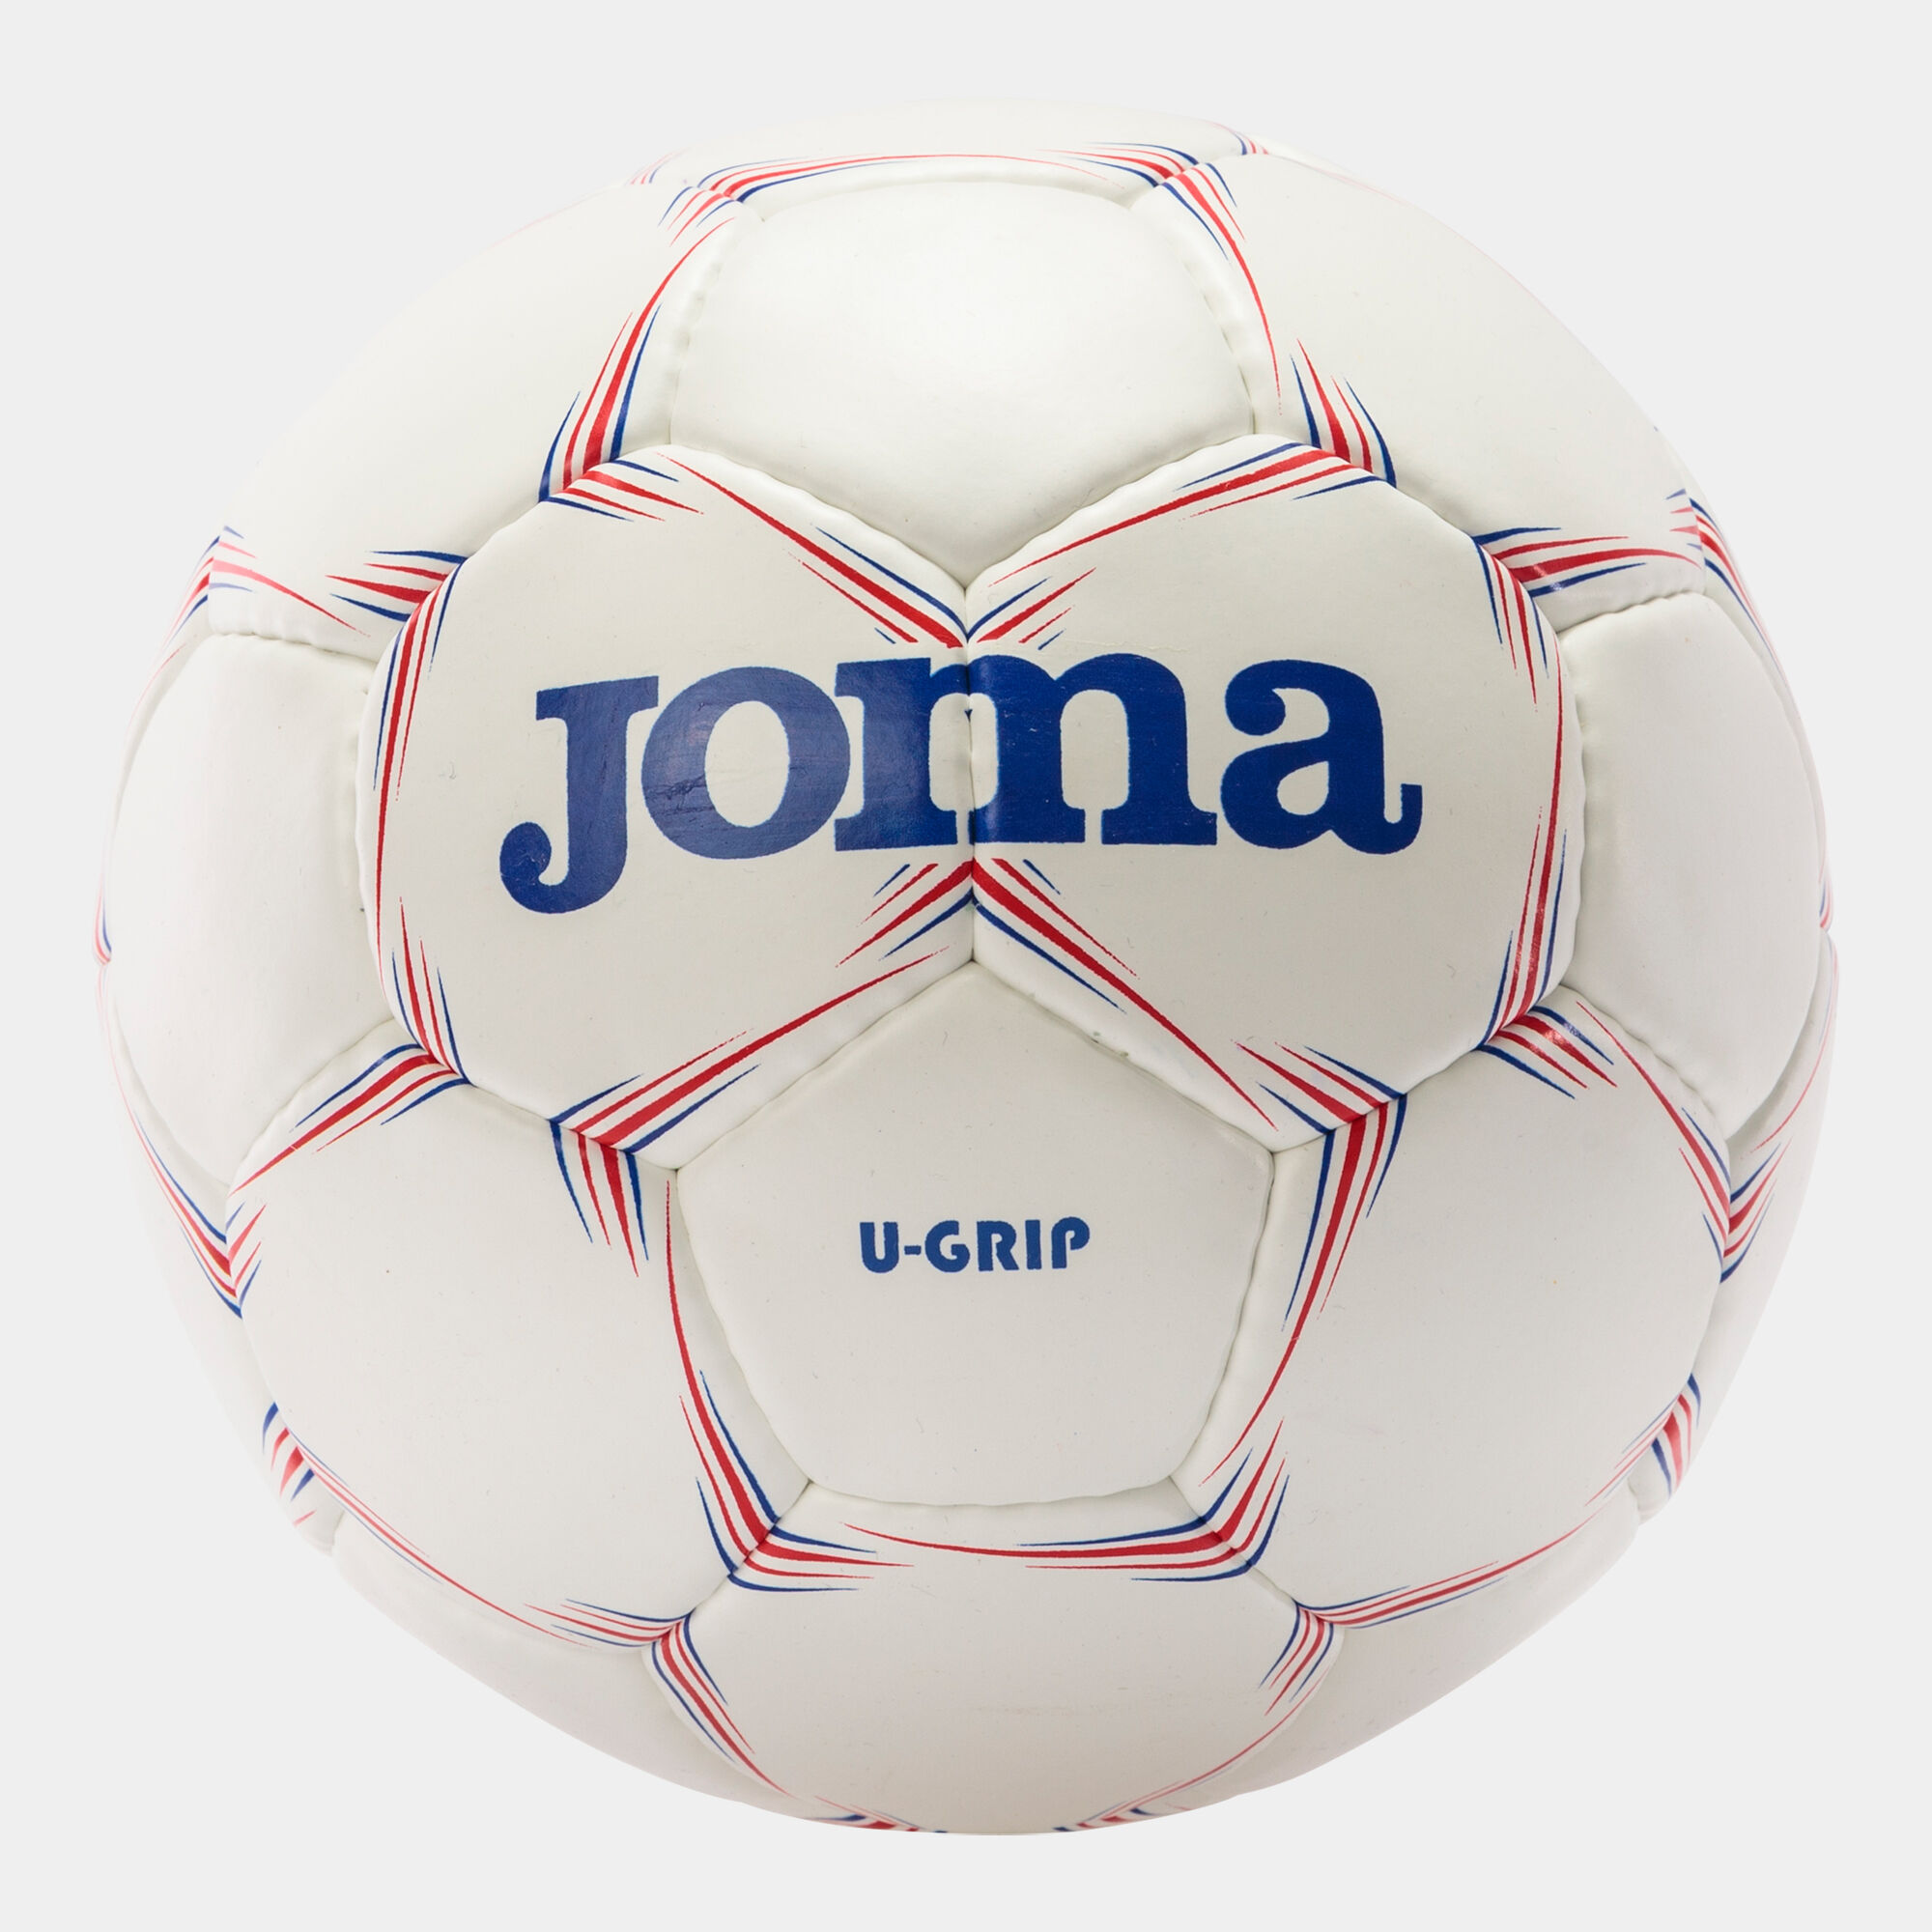 Handball ball U-Grip white red | JOMA®